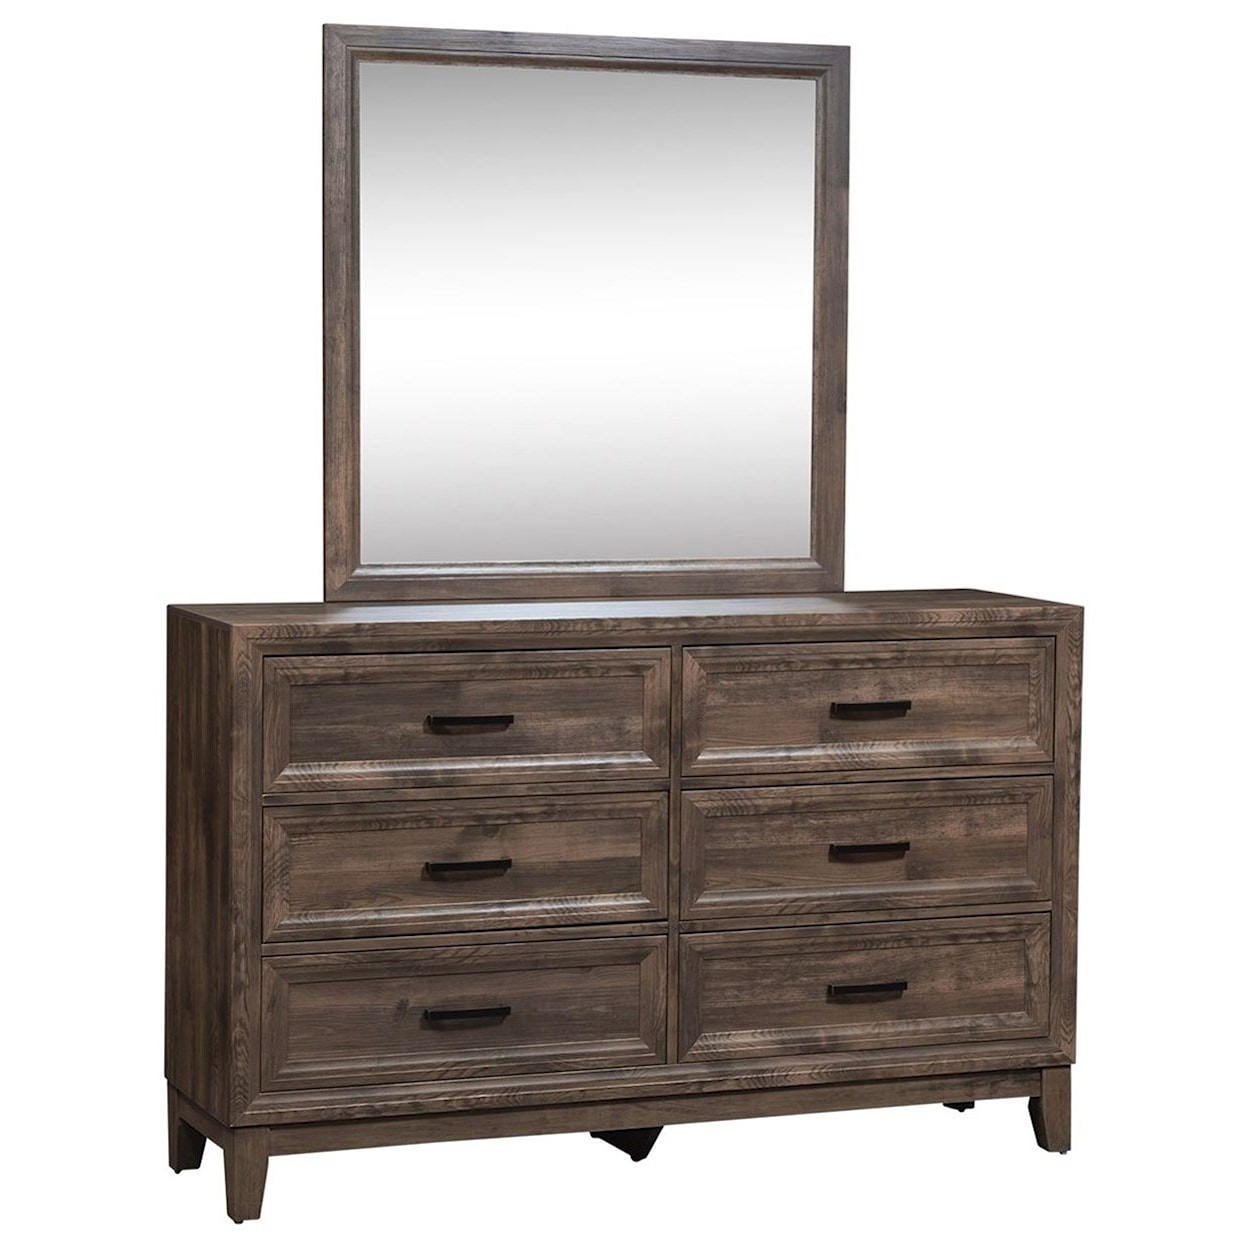 Libby Ridgecrest Dresser and Mirror Set